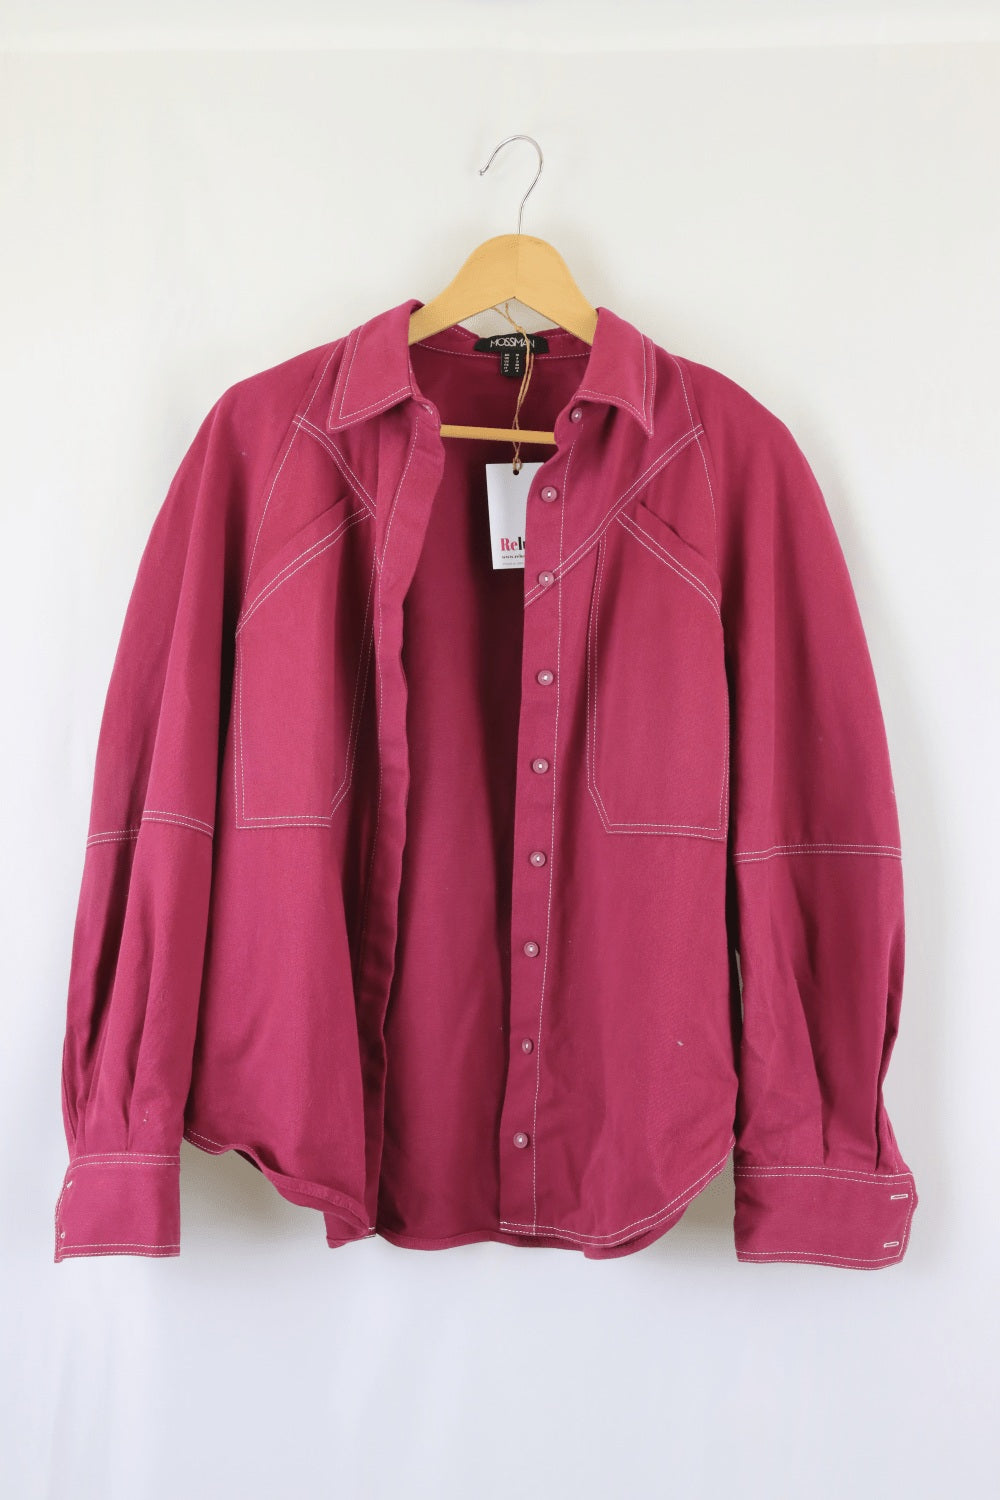 Mossman Pink Jacket 10